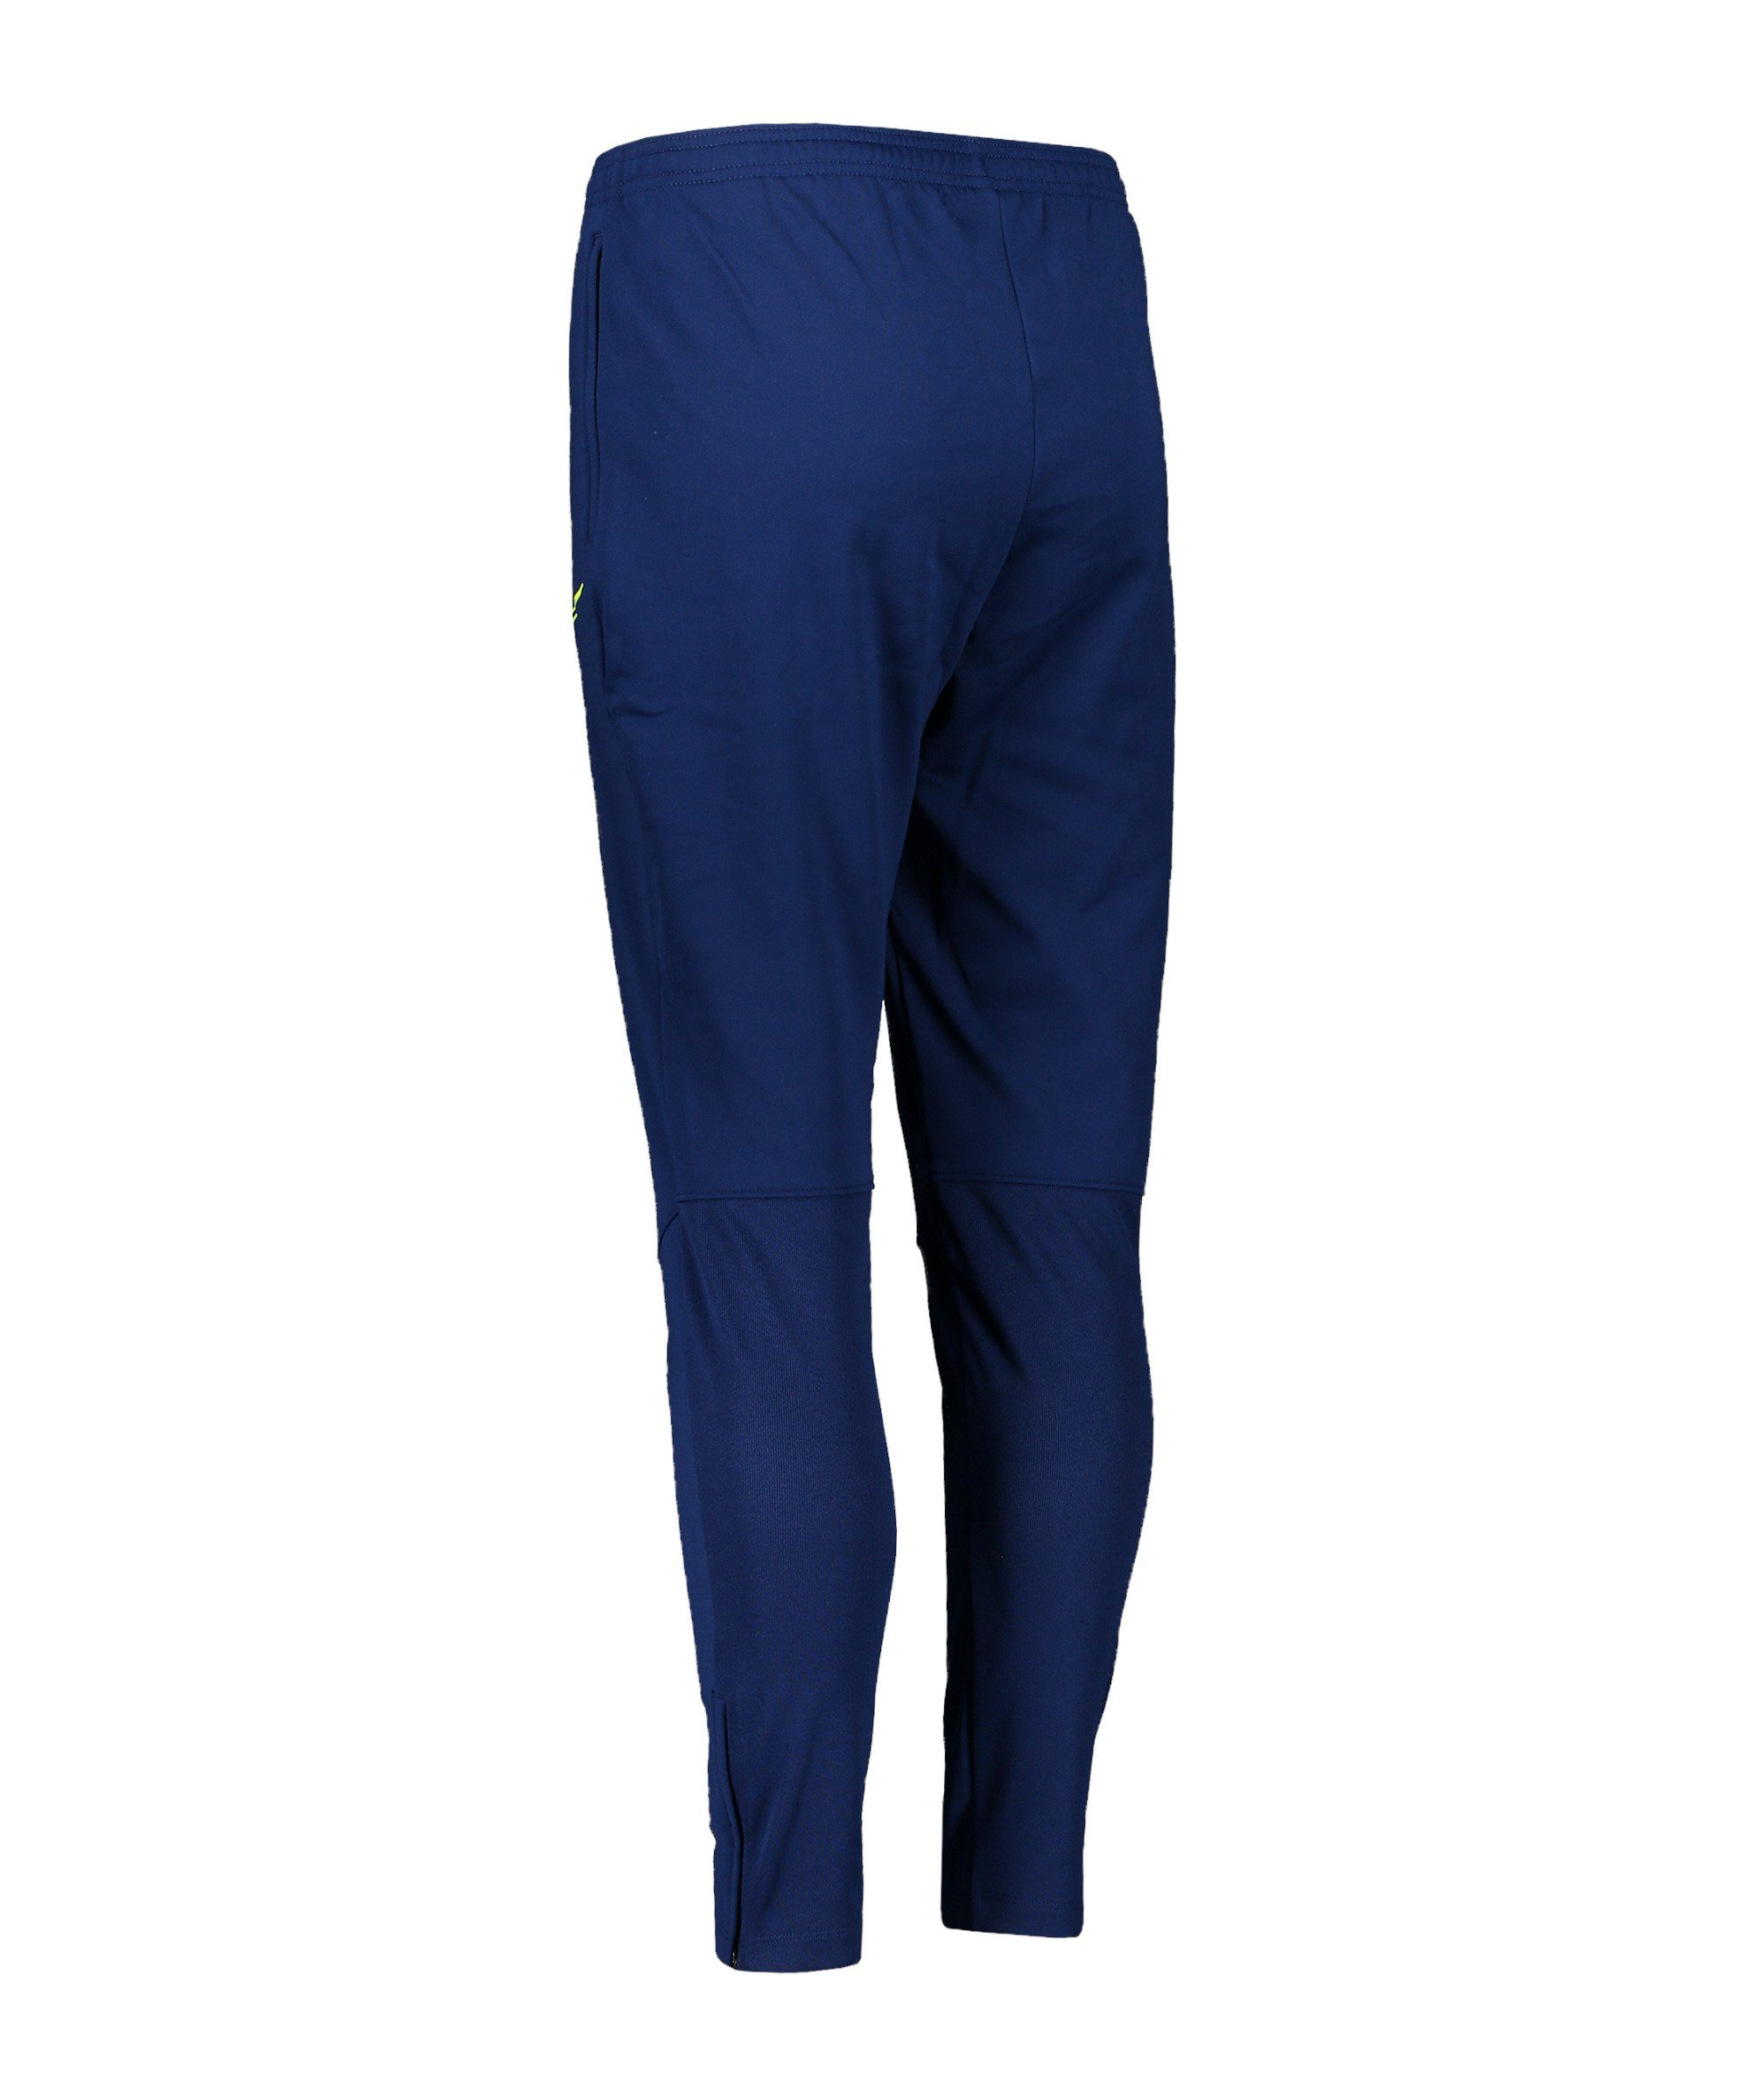 Therma Damen Sporthose blau Hose Winter Nike Warrior Academy